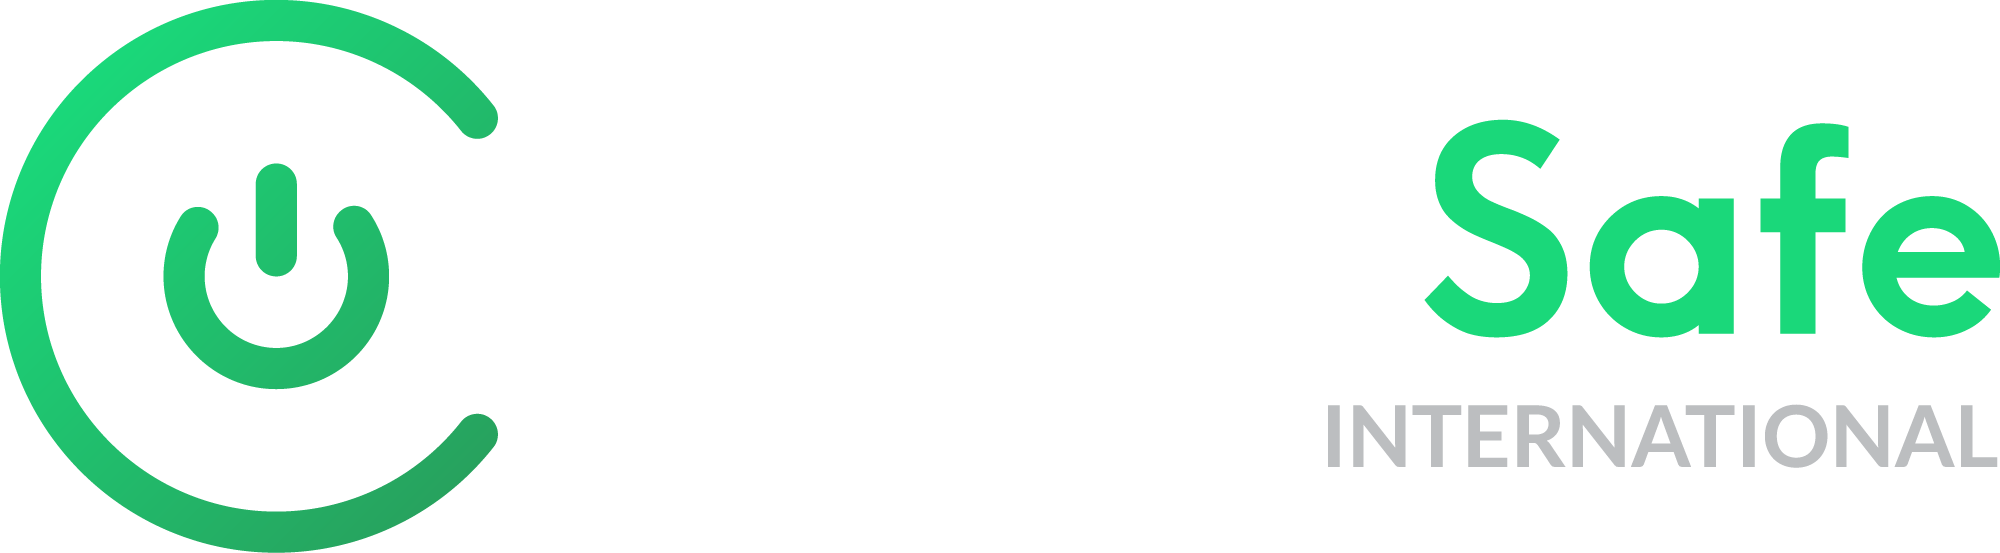 Cyber Safe International Logo Mobile